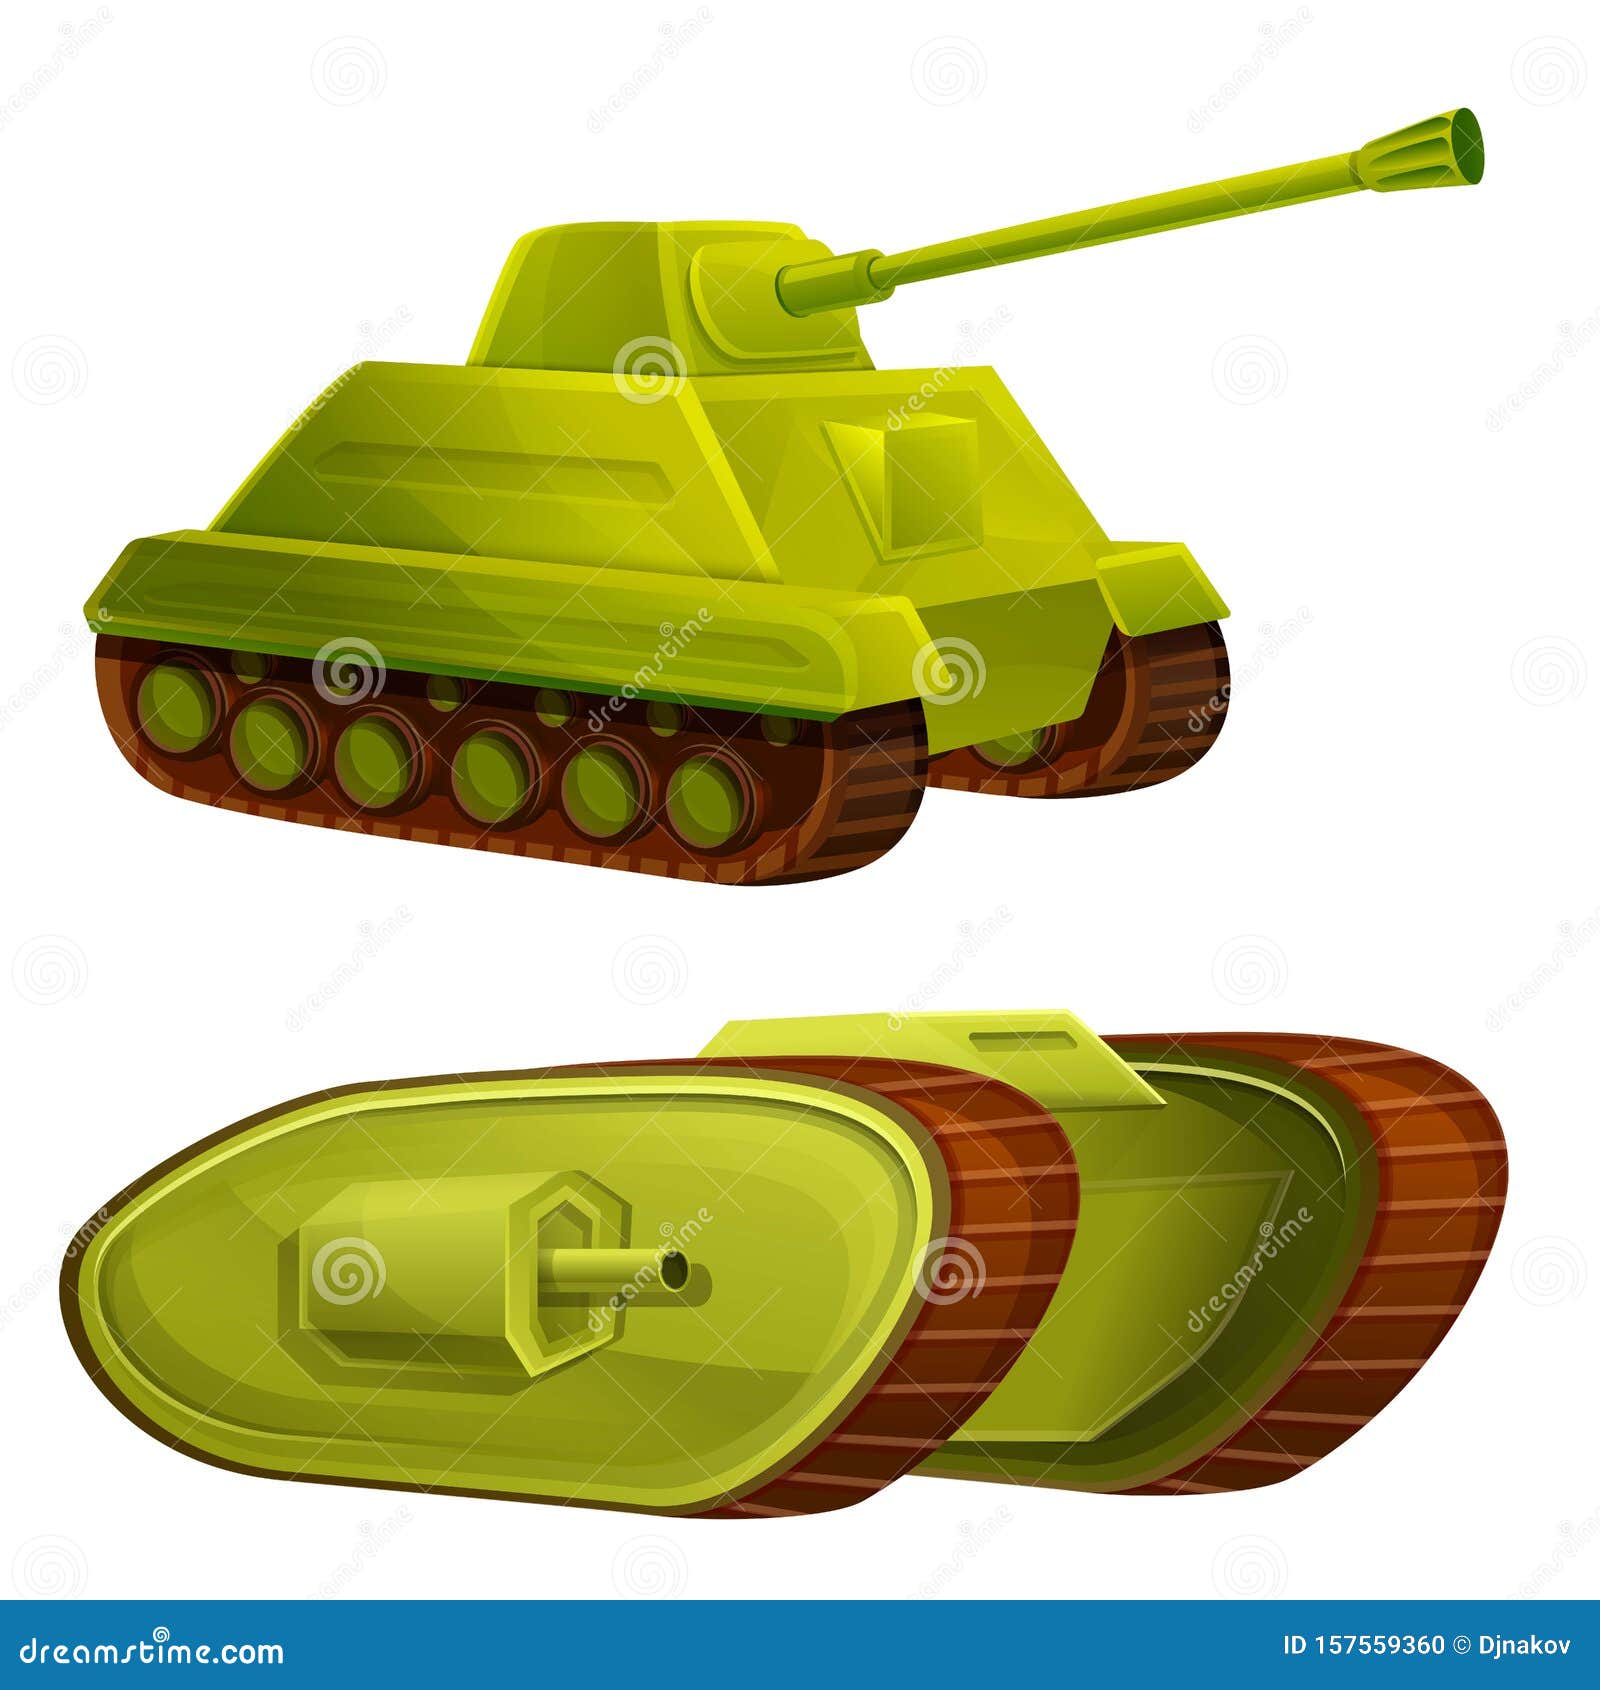 Cartoon Set of Green Old Tanks Stock Illustration - Illustration of tanks,  cannon: 157559360